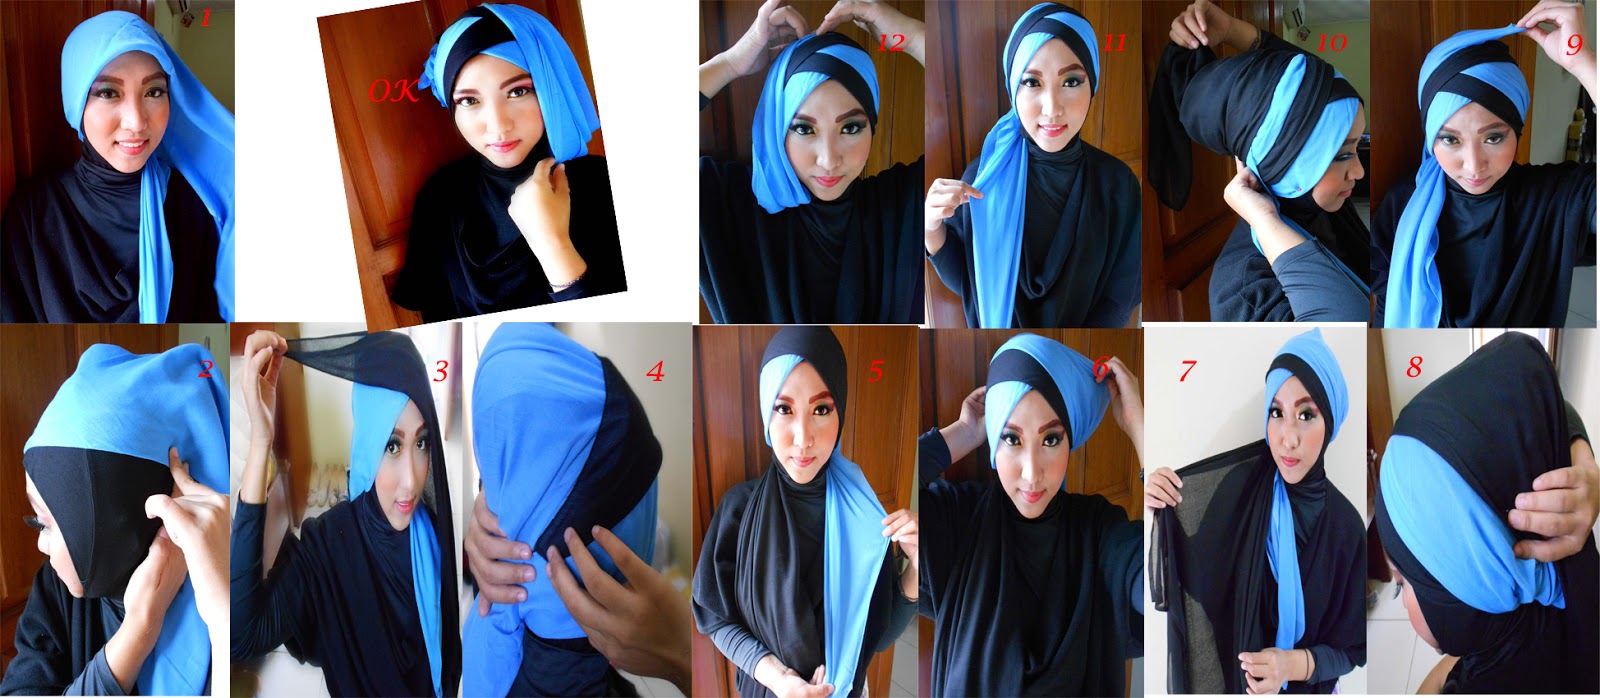 25 Gambarnya Tutorial Hijab Indonesia For Party 2017 Tutorial Hijab Indonesia